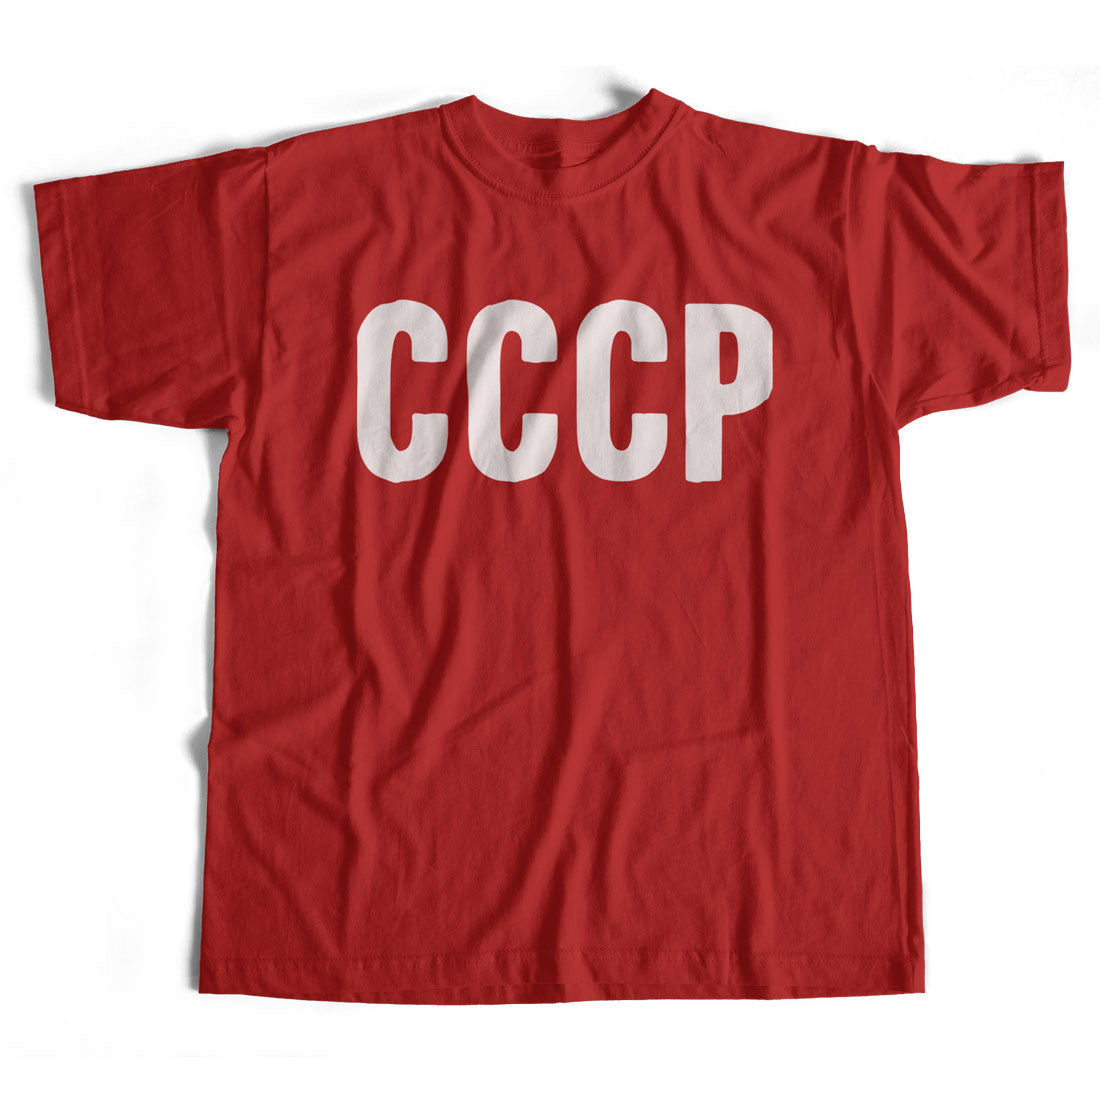 Classic Soviet Communism Cold War T Shirt Design - CCCP By Old Skool Hooligans